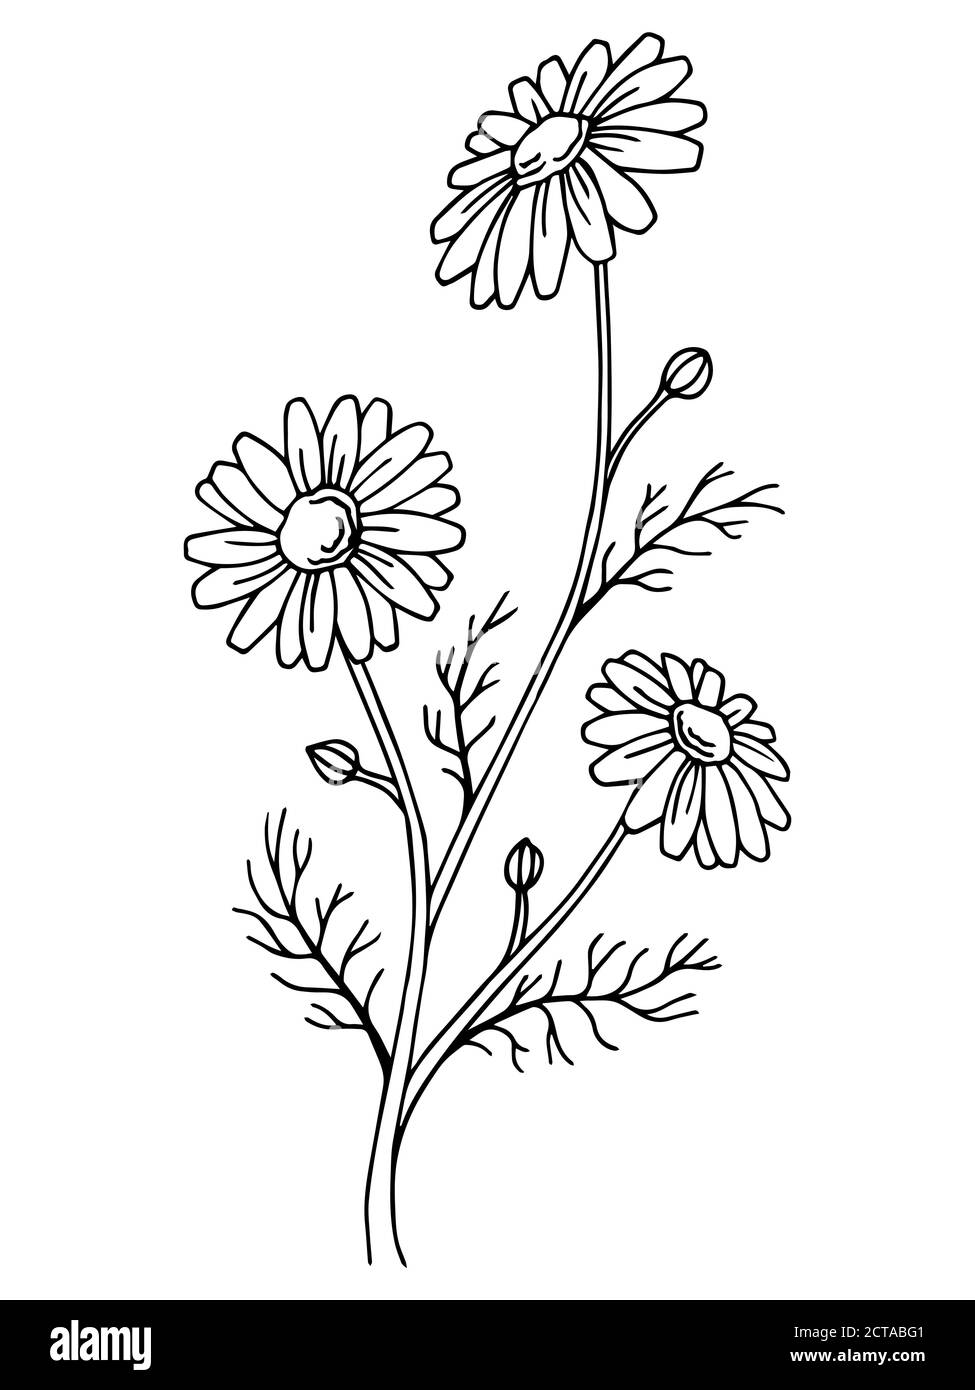 Chamomile flower graphic art black white isolated illustration vector Stock Vector